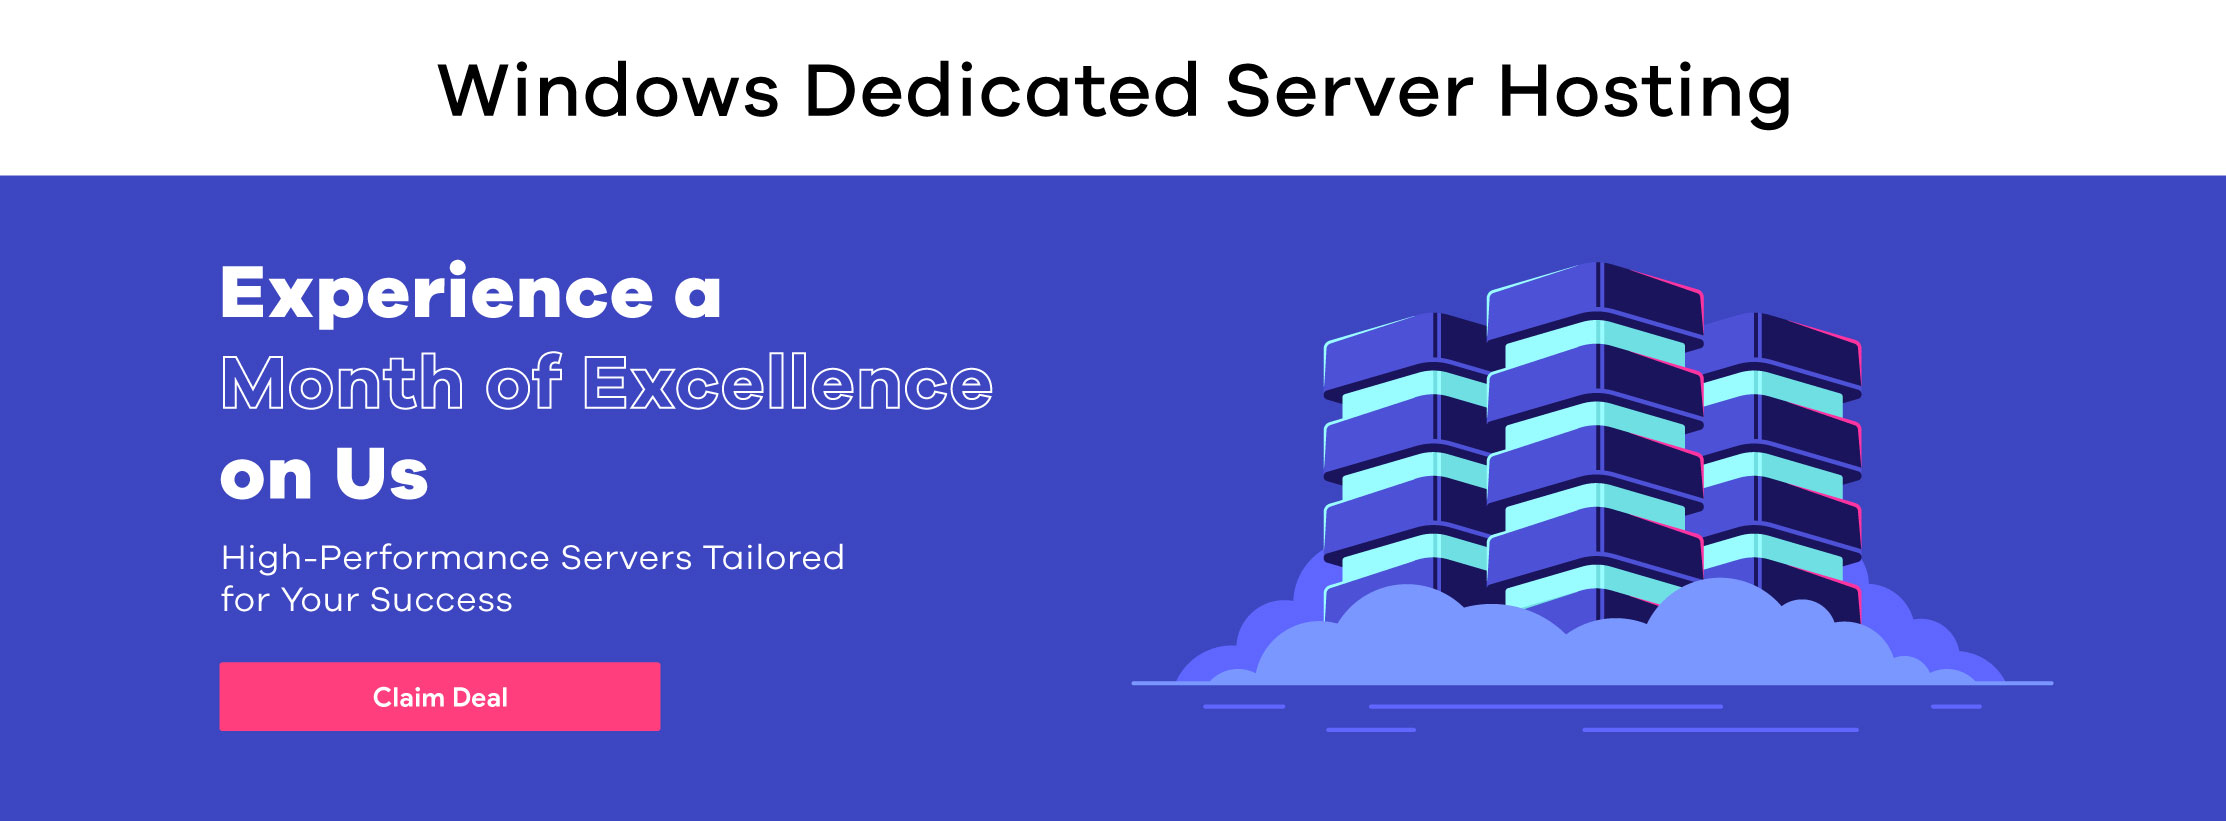 Windows-Dedicated-Server-Hosting